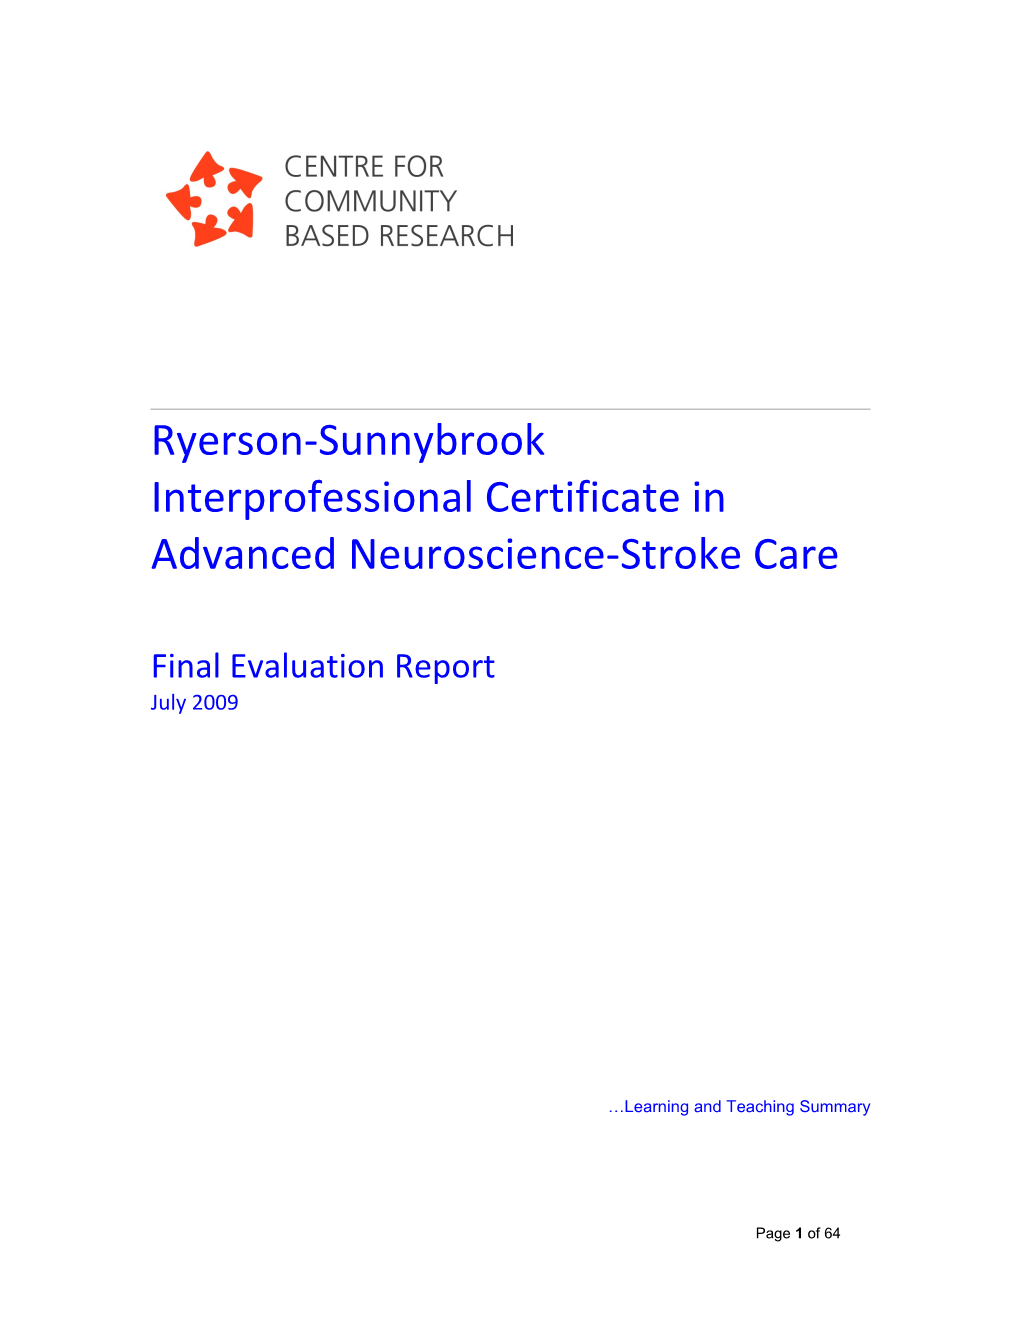 Ryerson-Sunnybrook Interprofessional Certificate in Advanced Neuroscience-Stroke Care